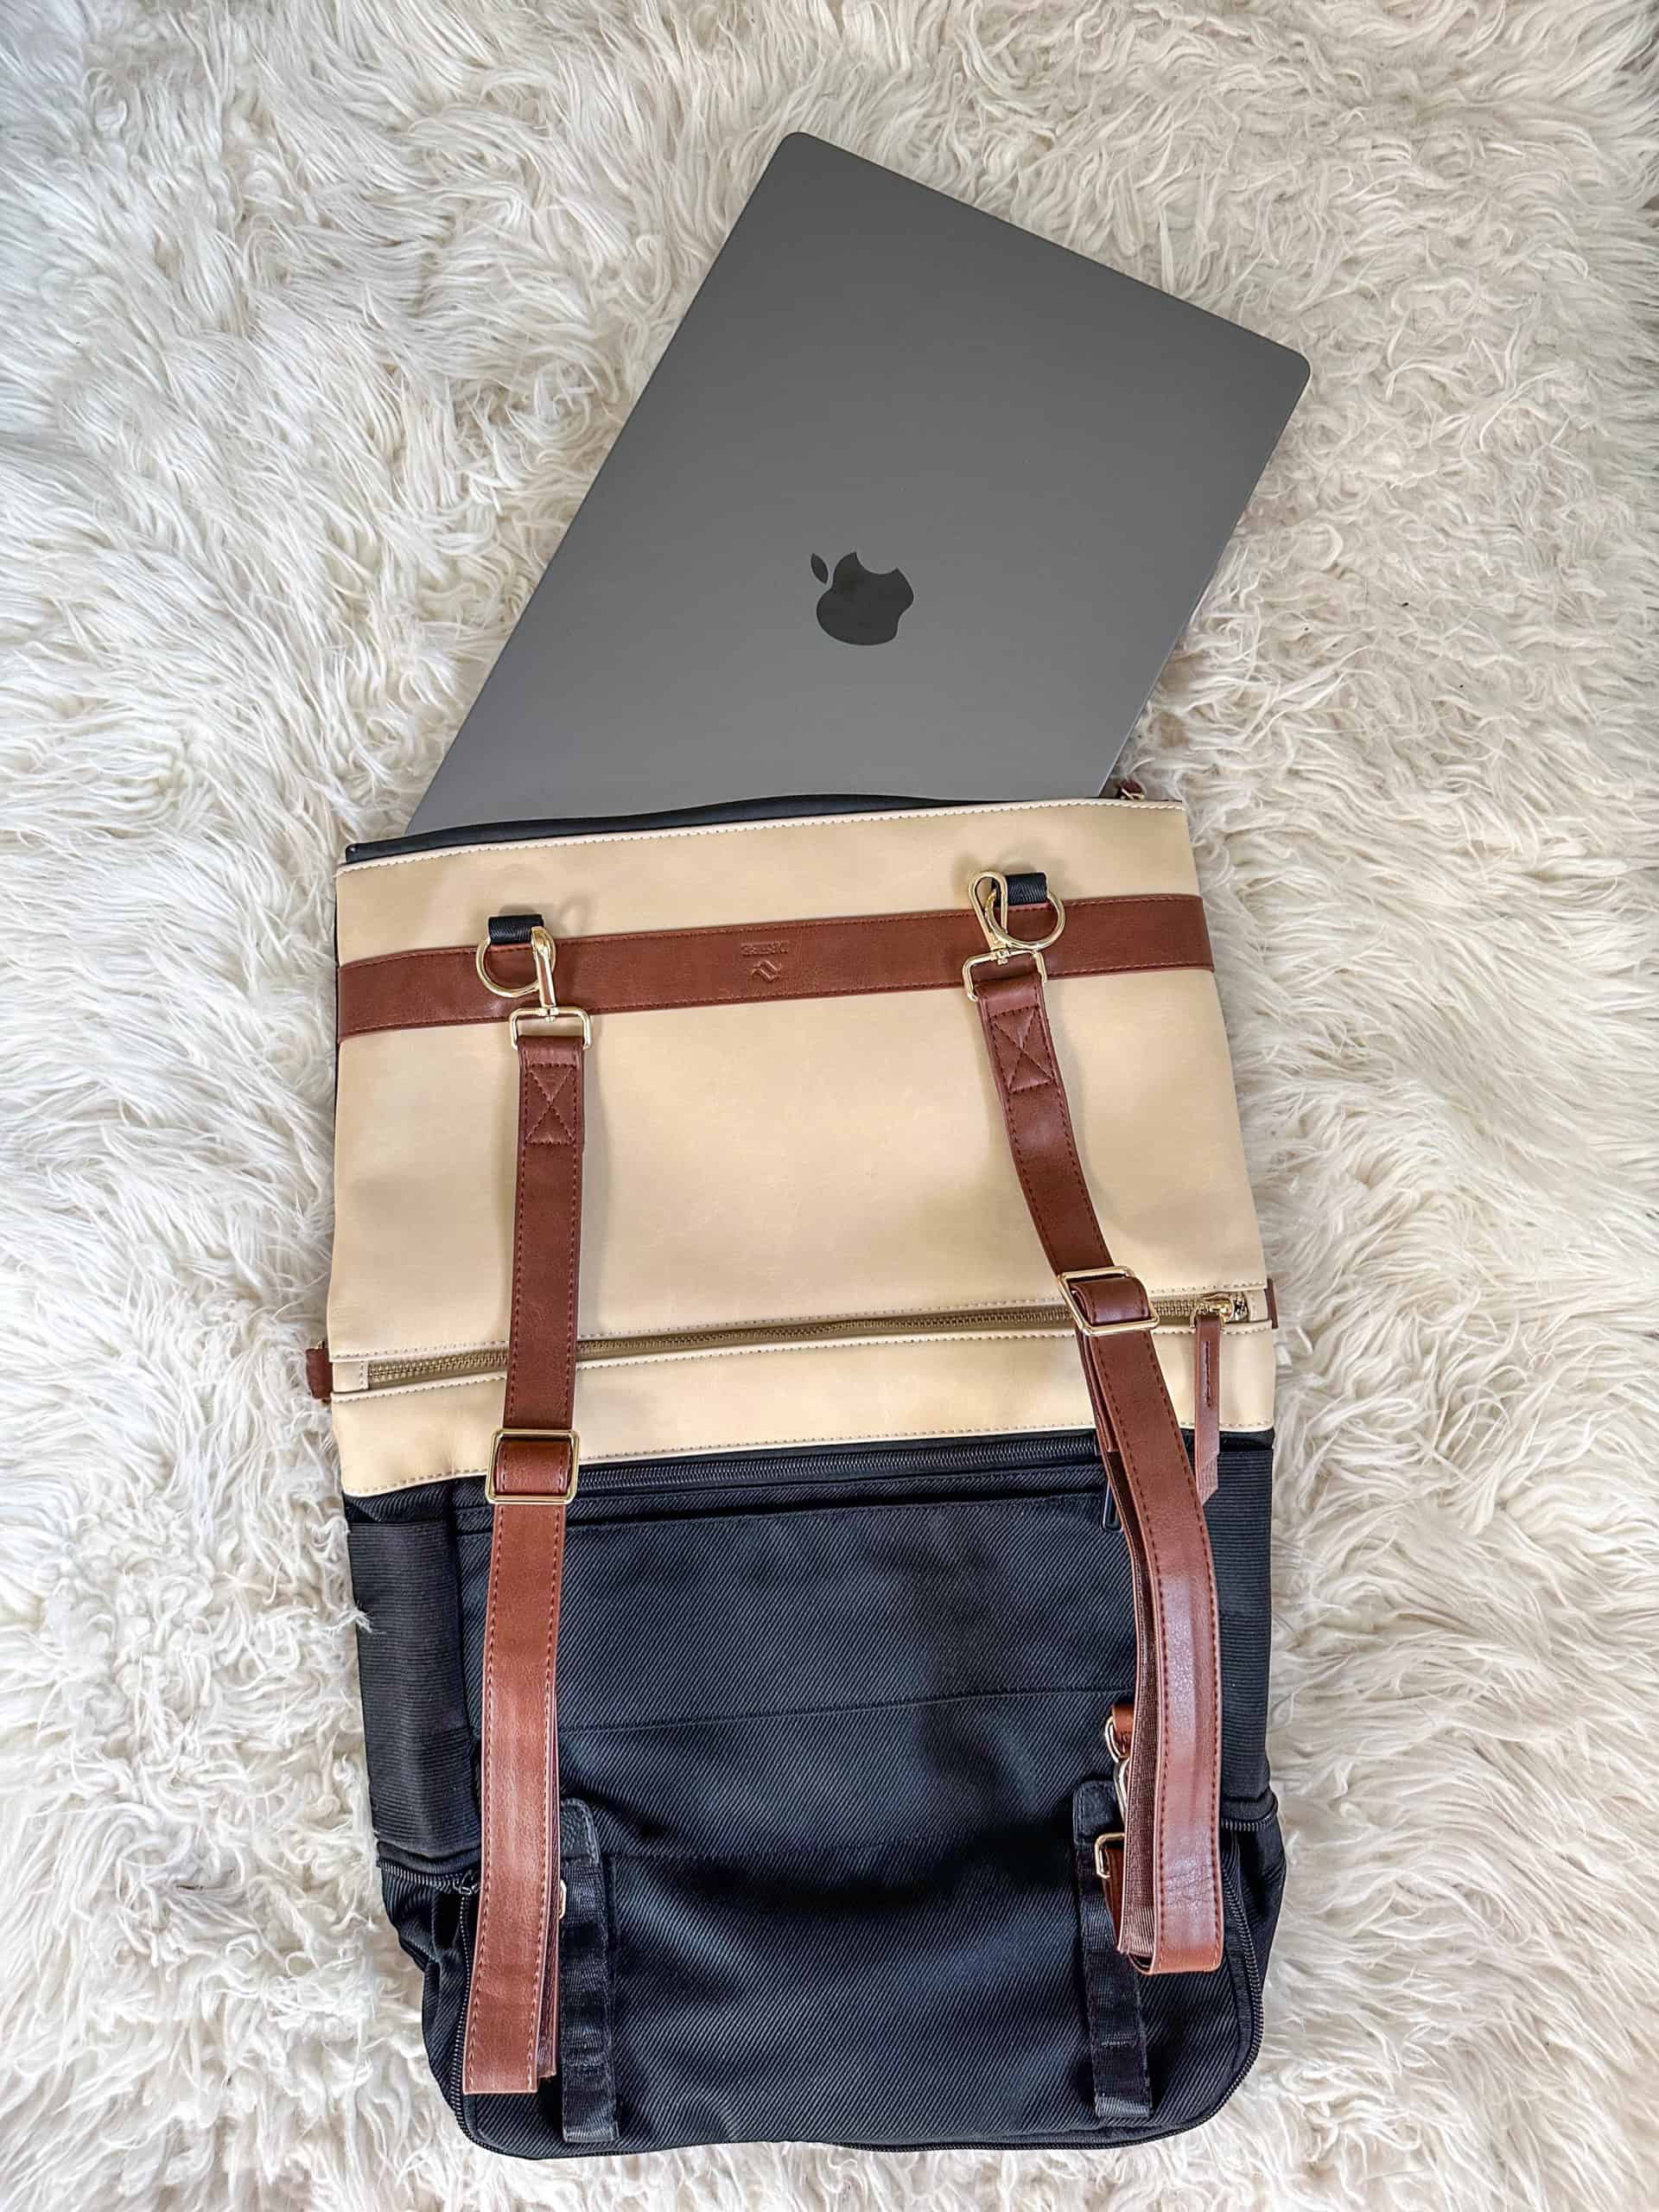 4Pcs Canvas School Backpack Combo Set with Kawaii Teddy Bear Pendant Handle  Shoulder Tote Bag Laptop Schoolbag for Students (Blue) - Walmart.com